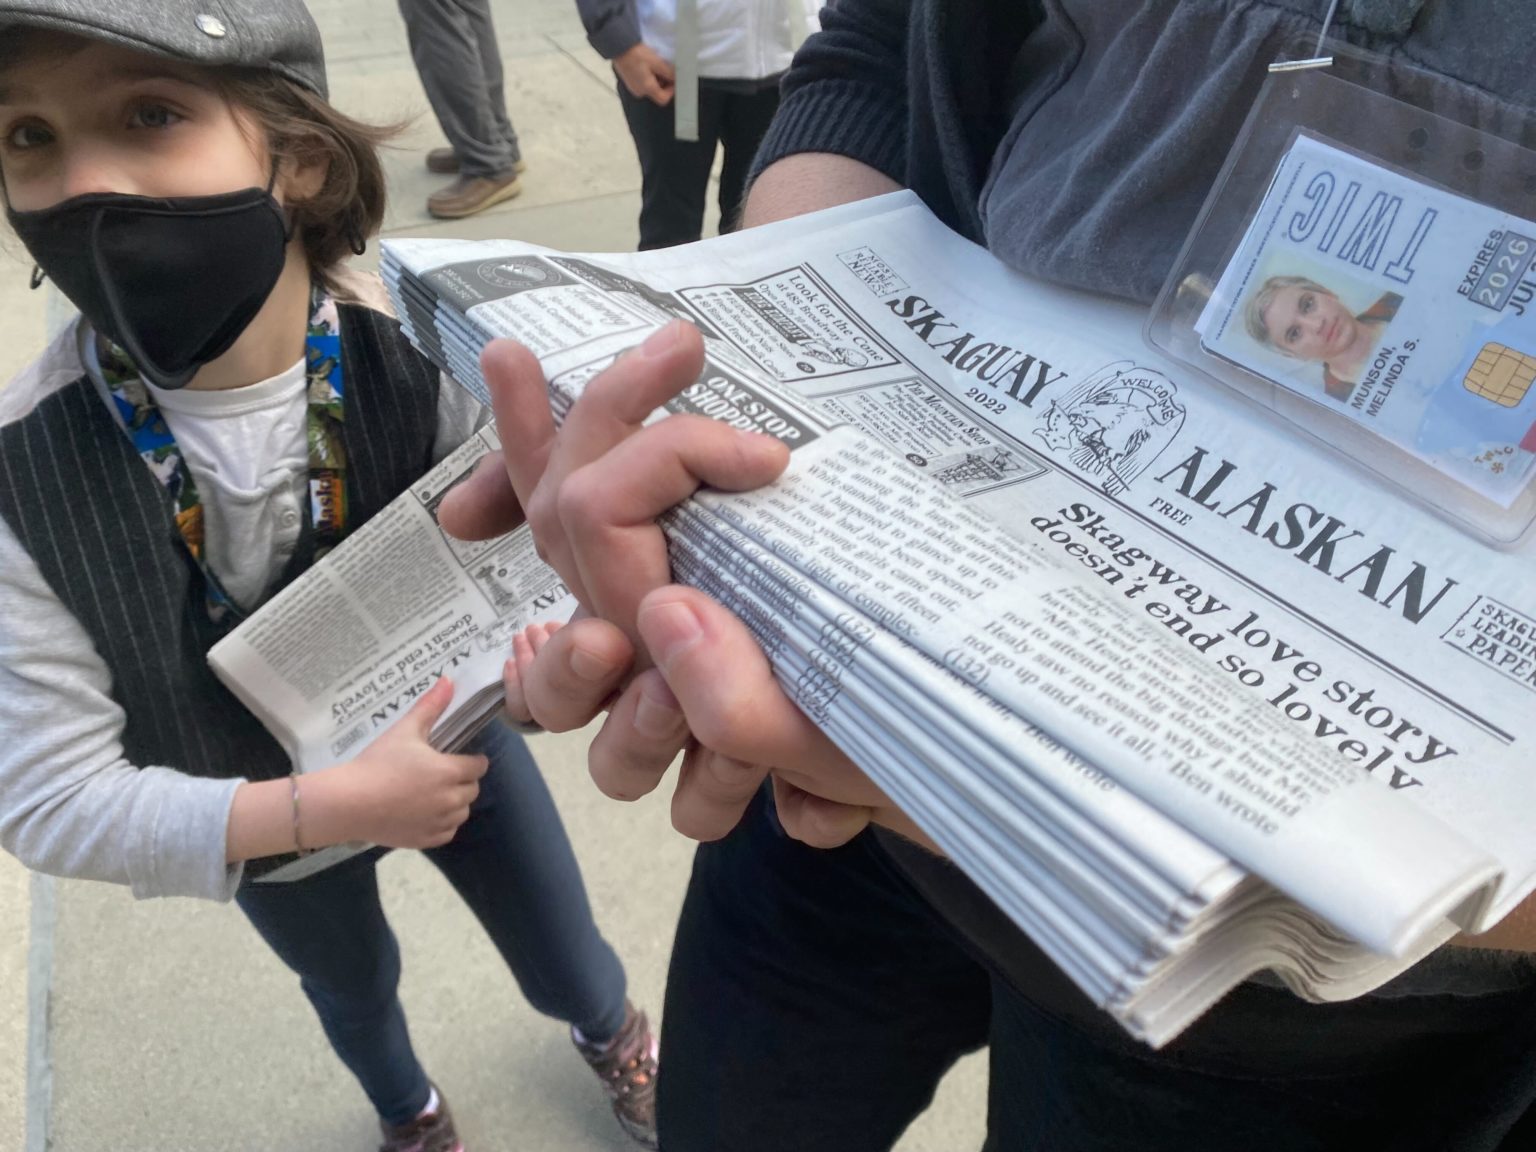 two people hold Skagway newspapers